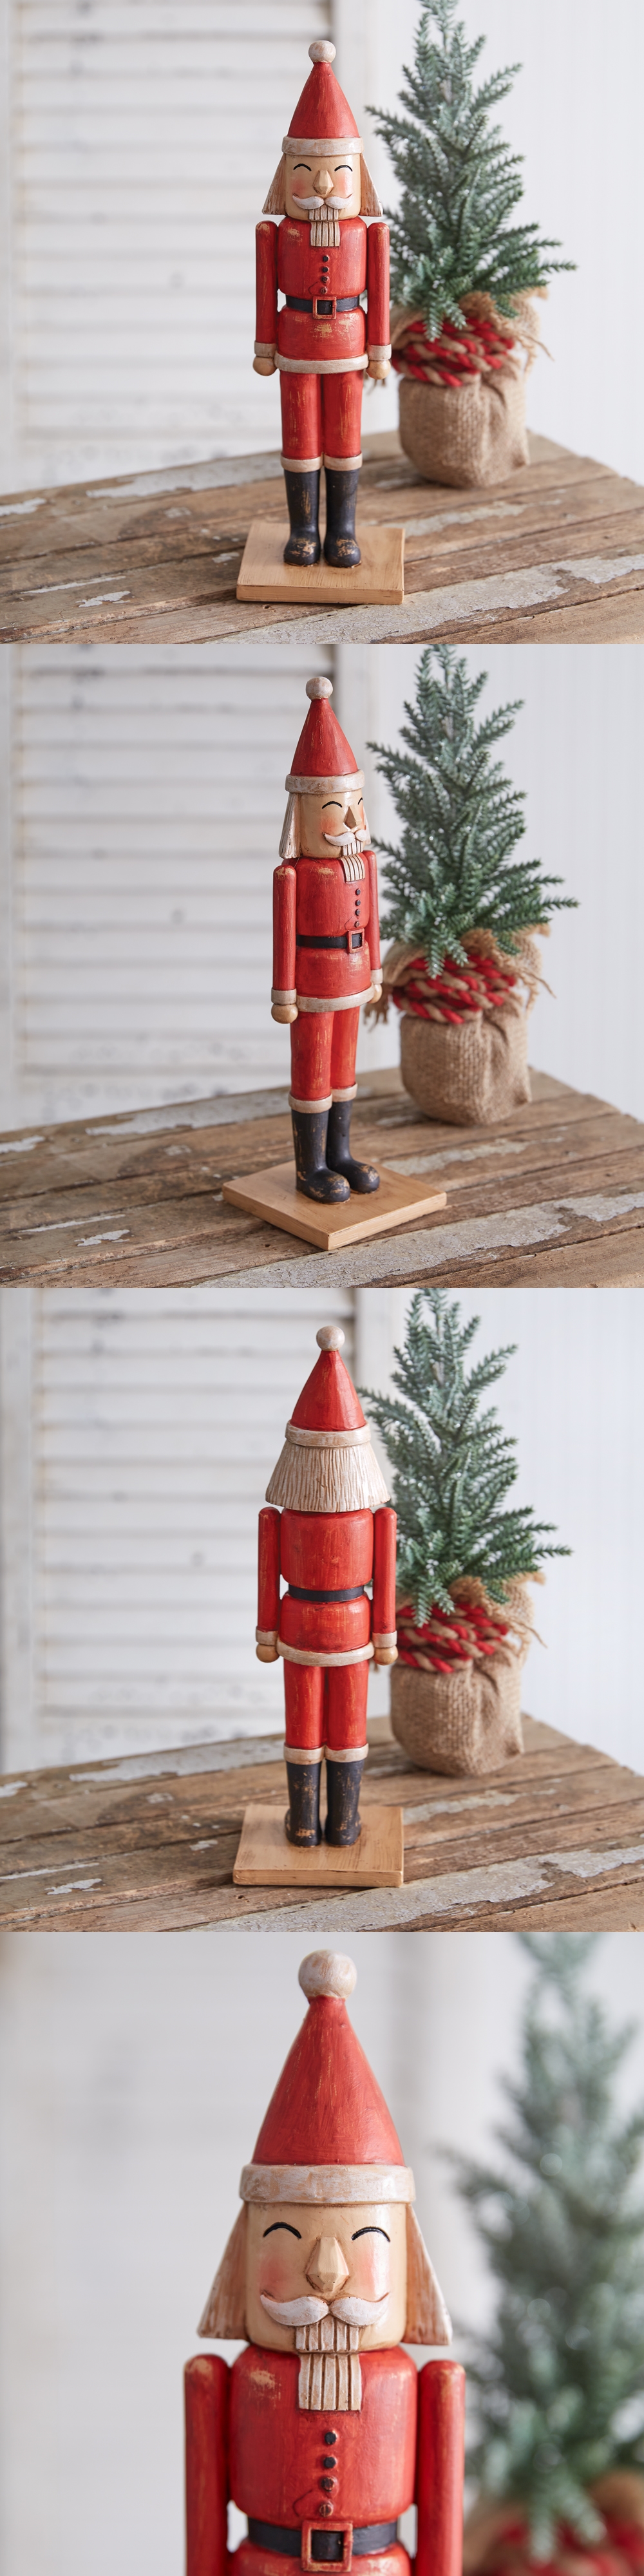 CTW Home Collection Rustic Santa as a Nutcracker Figurine